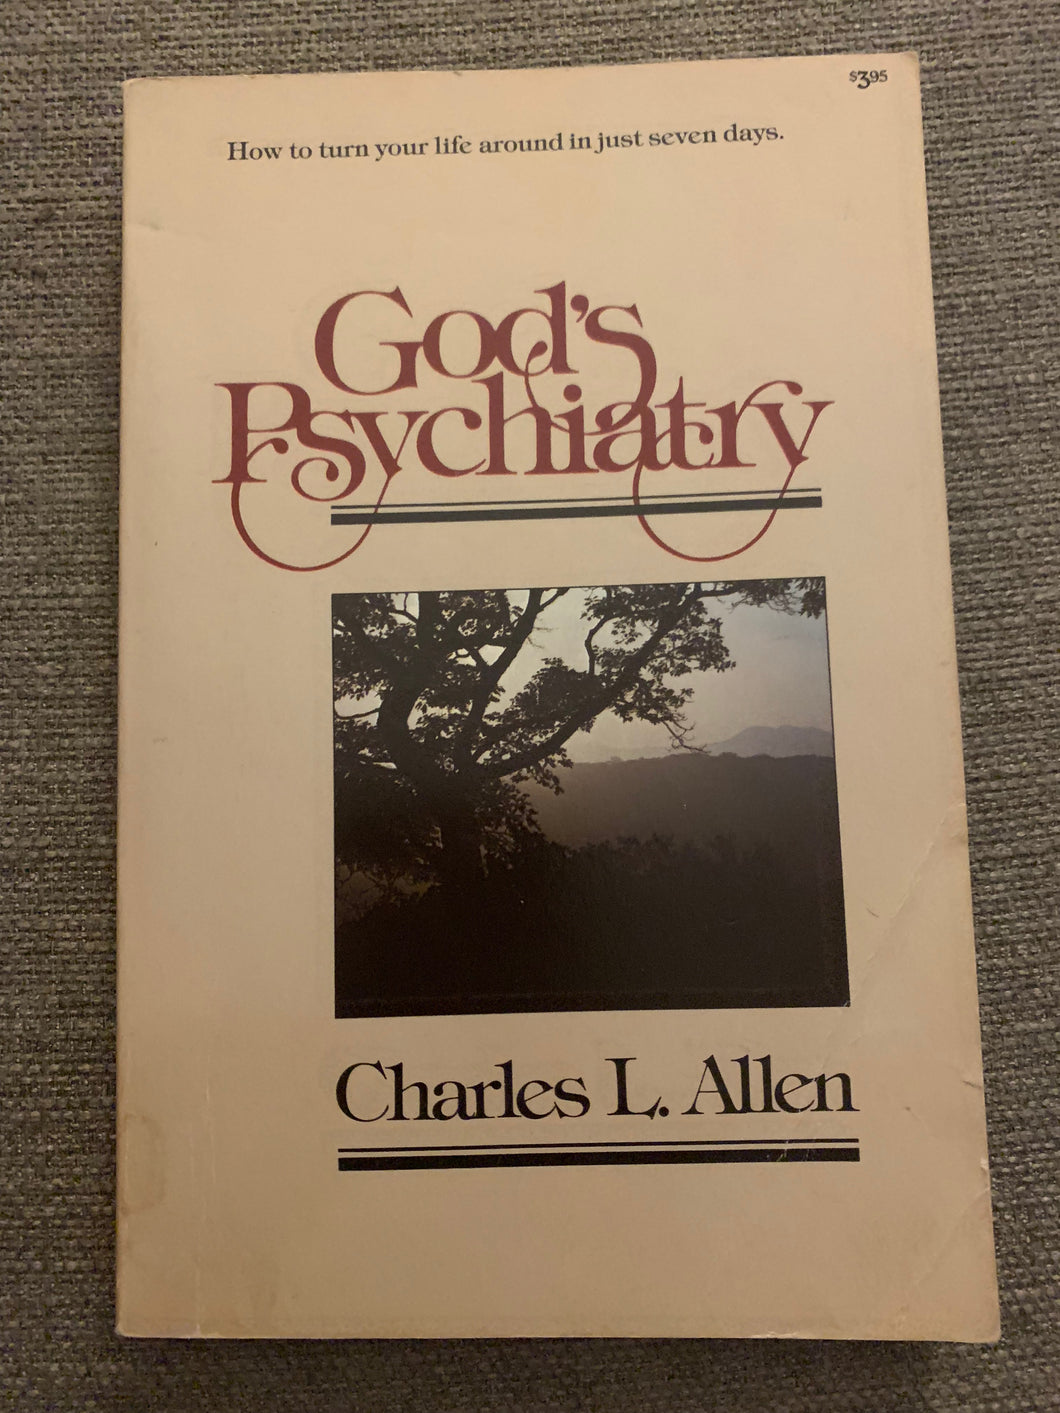 God's Psychiatry by Charles L. Allen